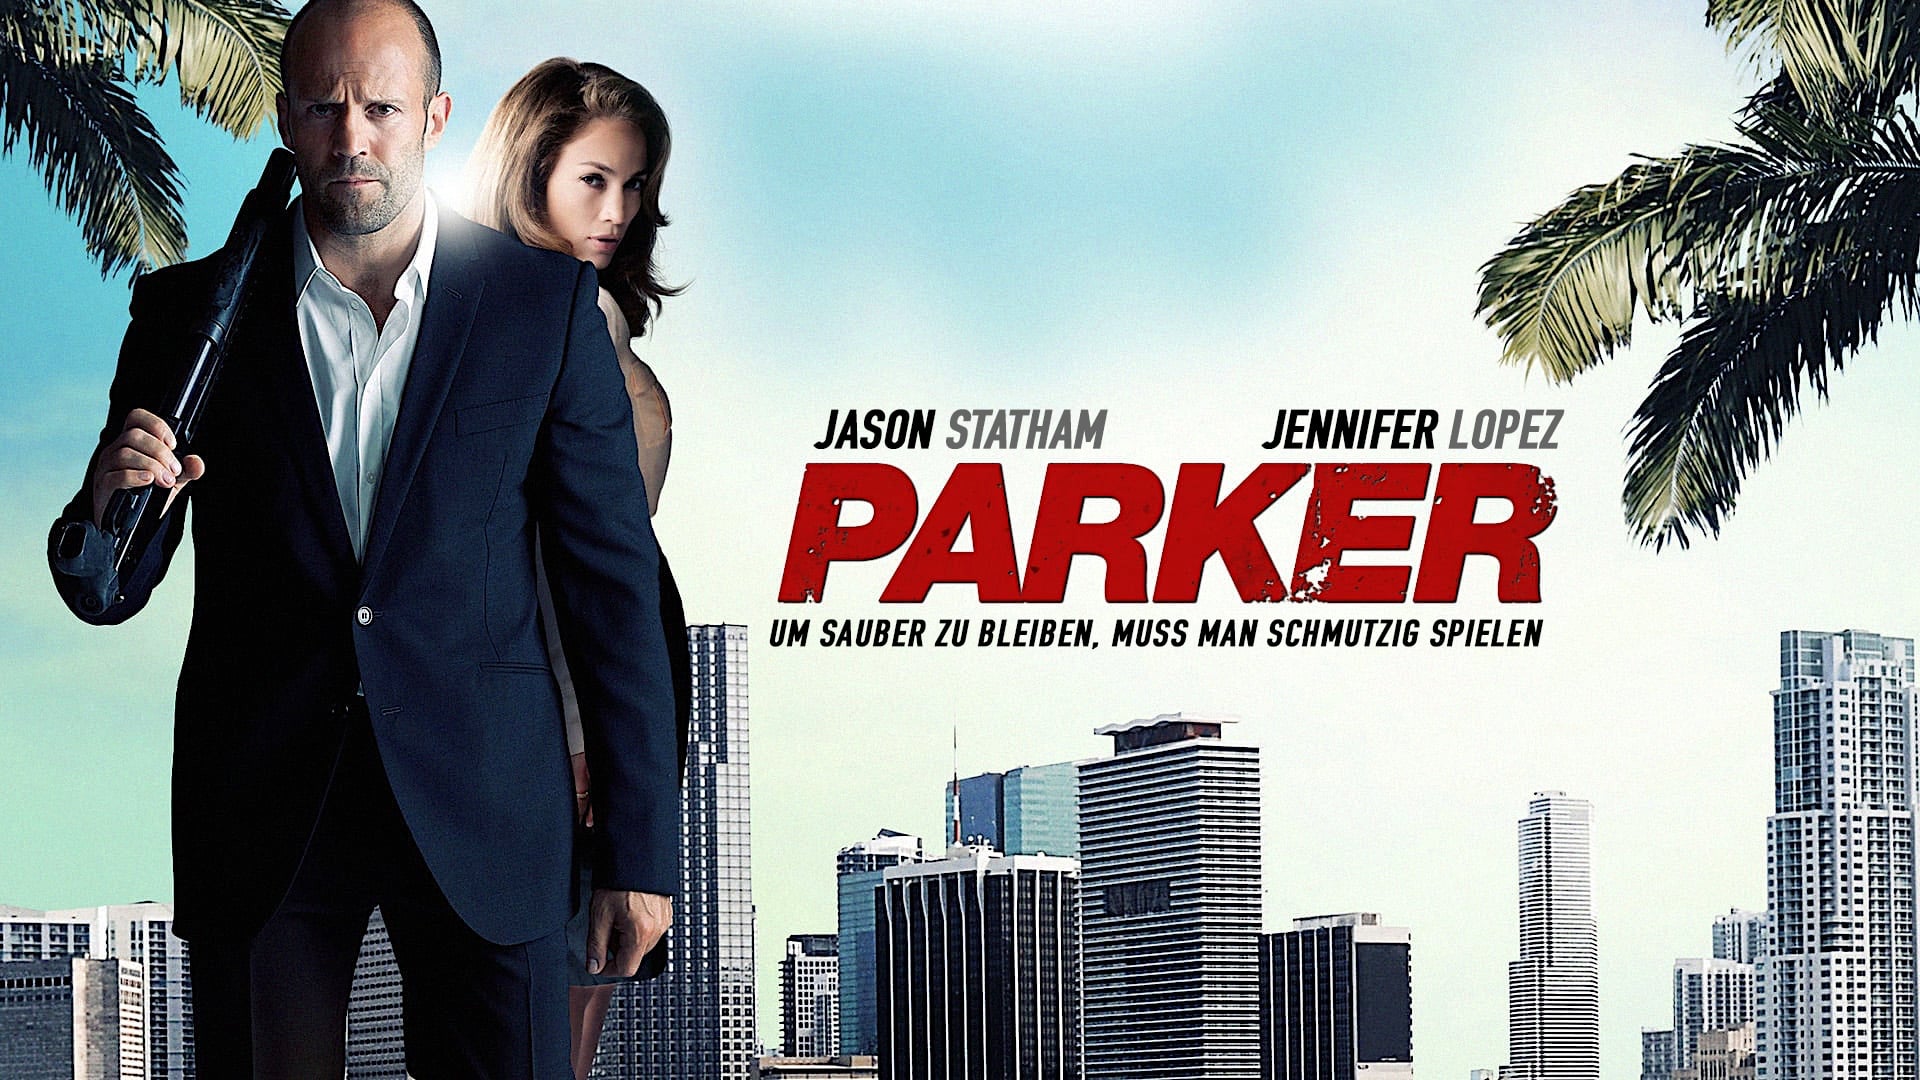 Watch Parker (2013) Full Movie Online Free | Movie & TV Online HD Quality